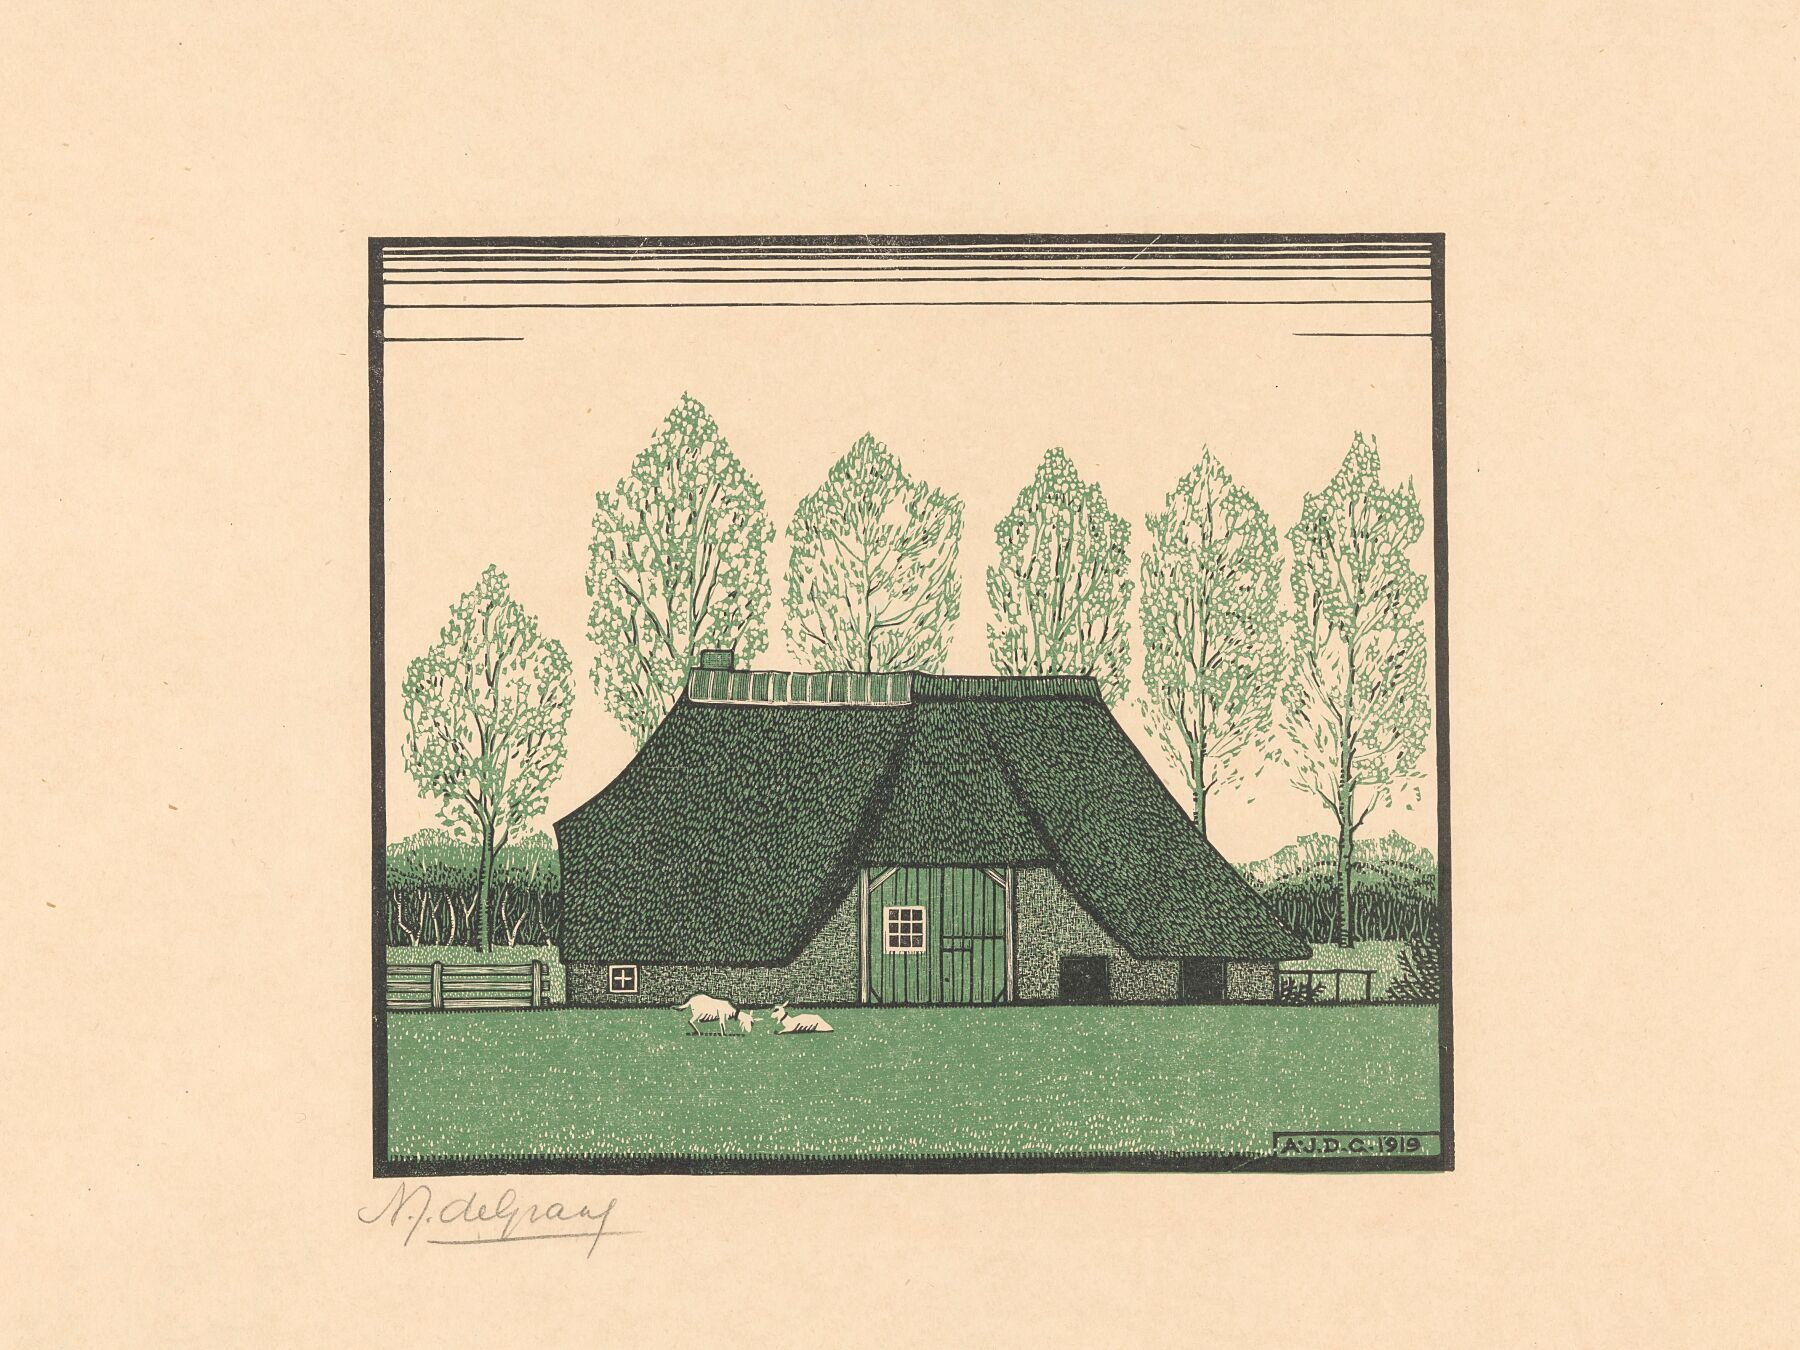 A Thatched Farm by Julie de Graag - 1919